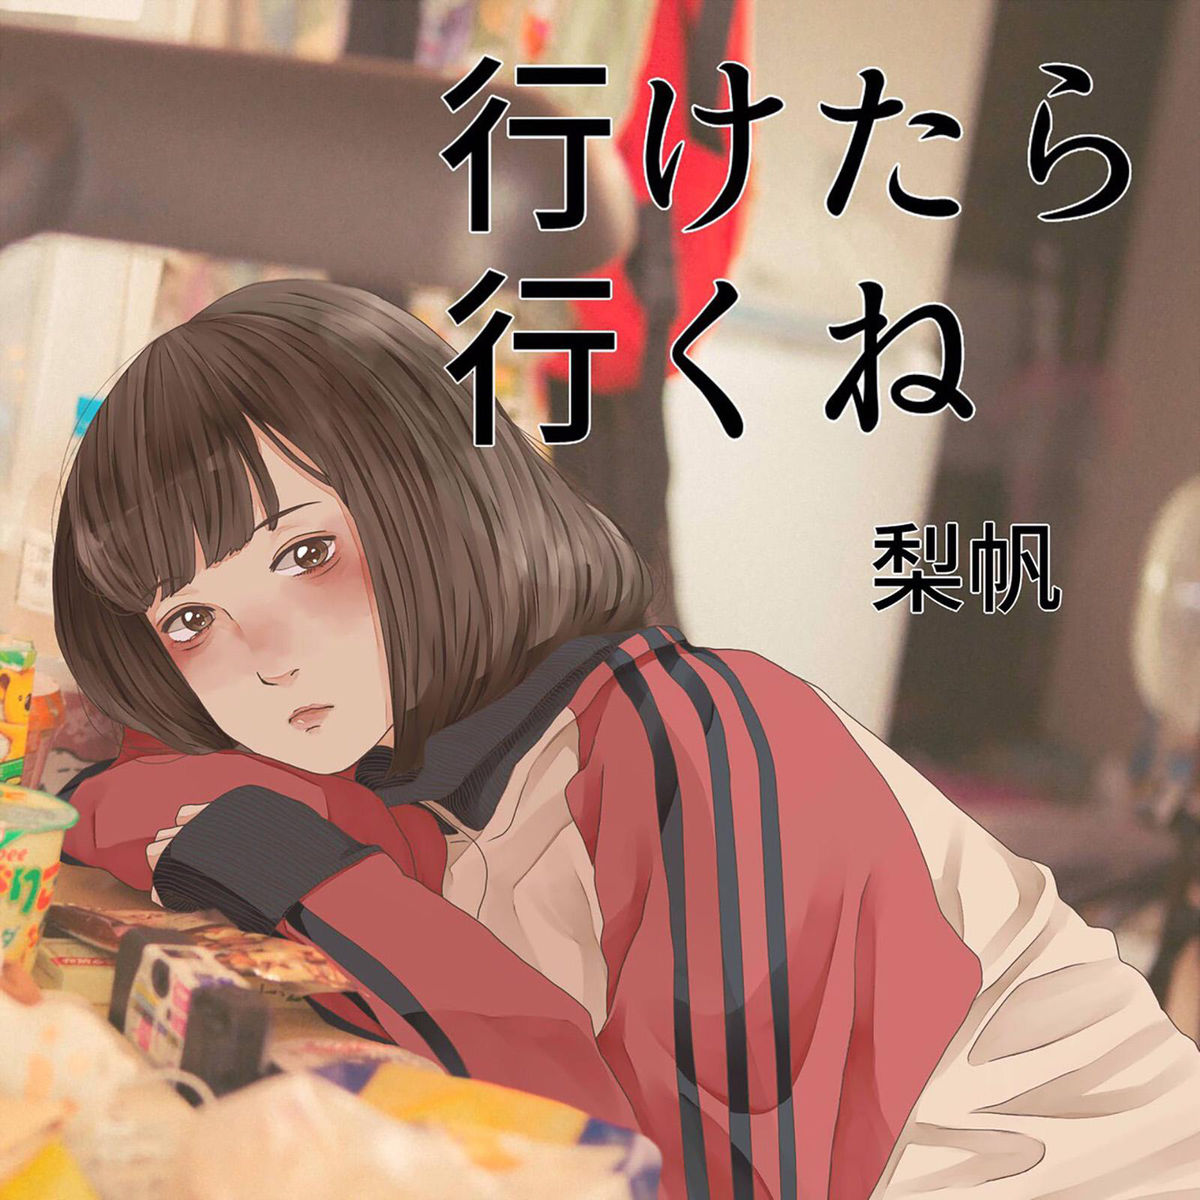 Cover art for『riho nishikata - 嫉妬しろよ』from the release『Iketara Iku ne